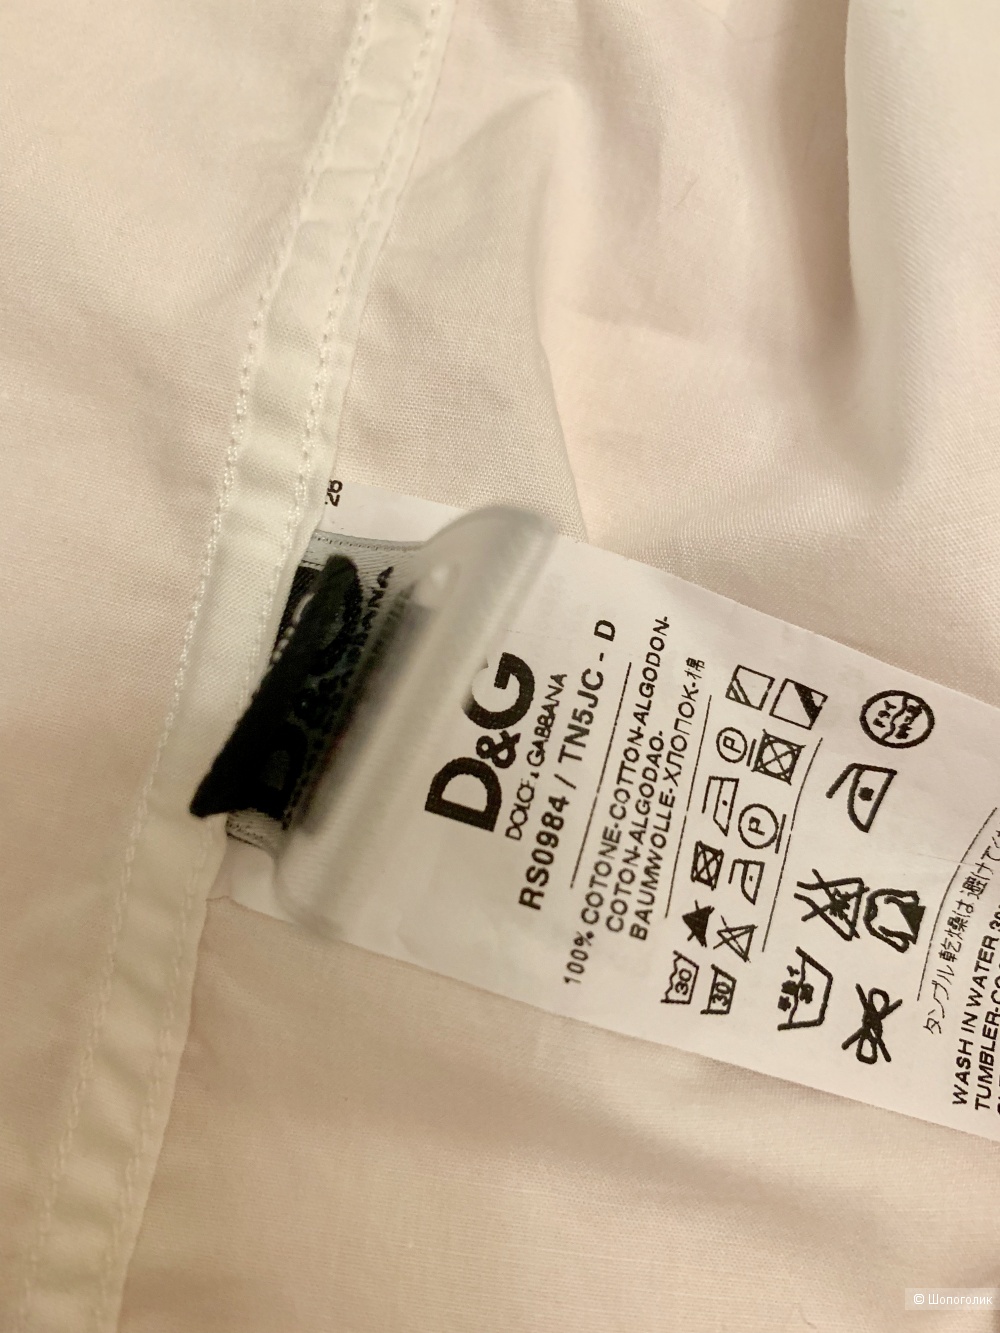 Мужская рубашка D&G от Dolce&Gabbana, 48 размер